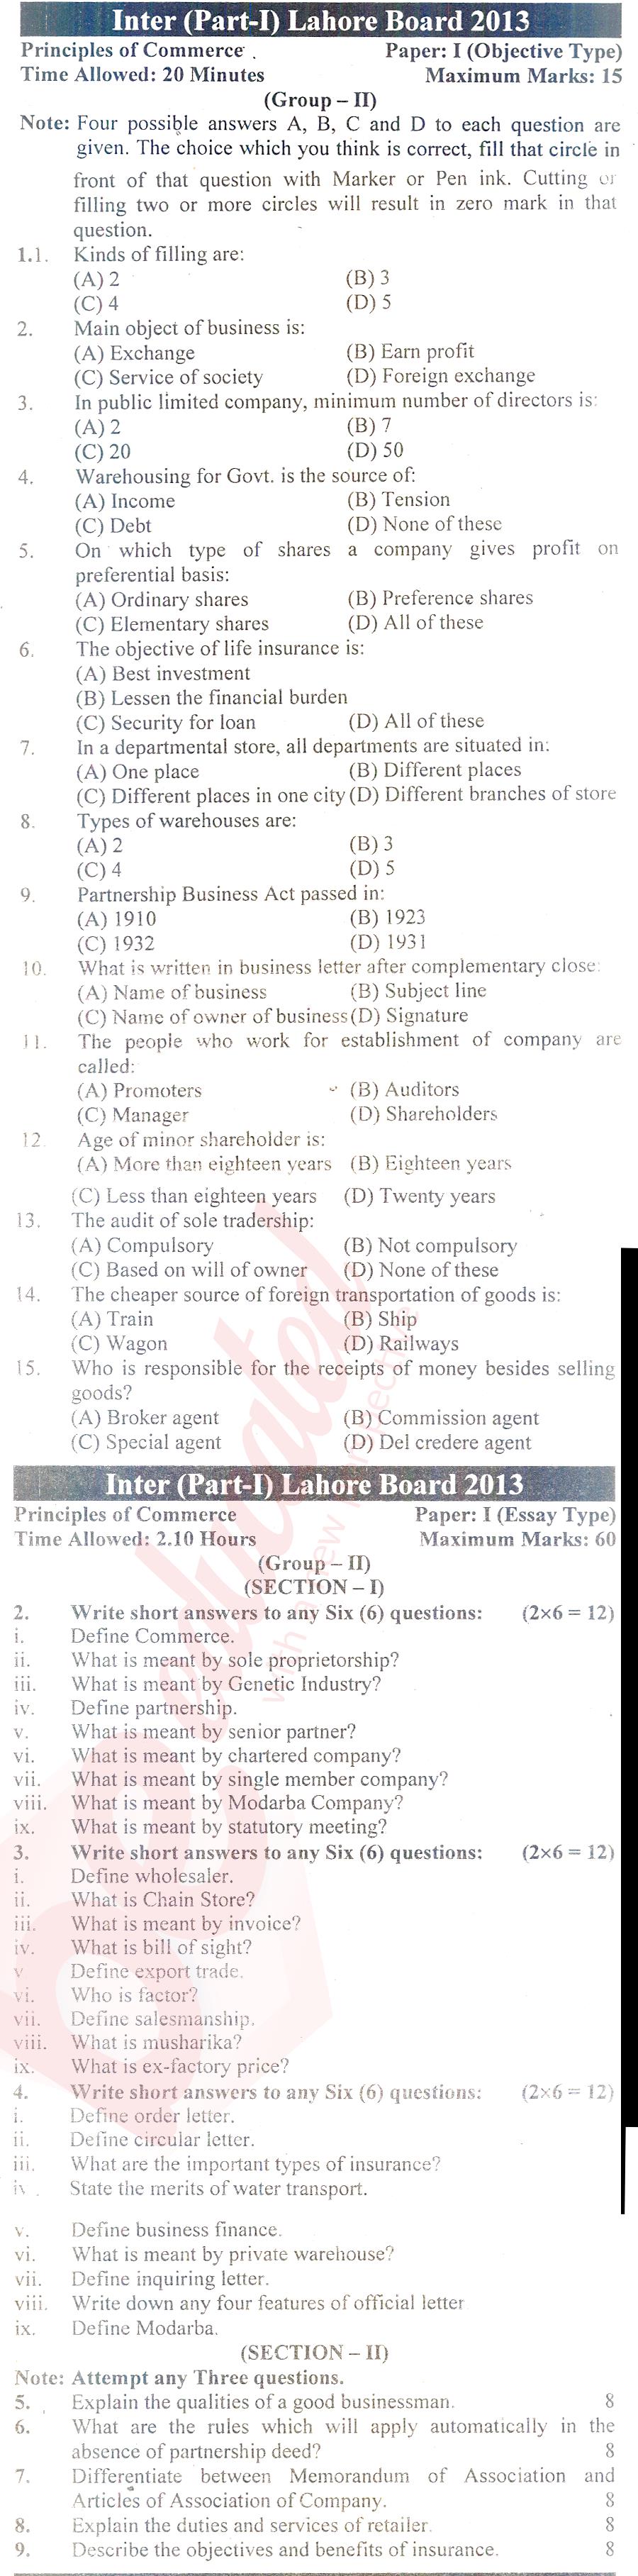 Principles of Commerce ICOM Part 1 Past Paper Group 2 BISE Lahore 2013